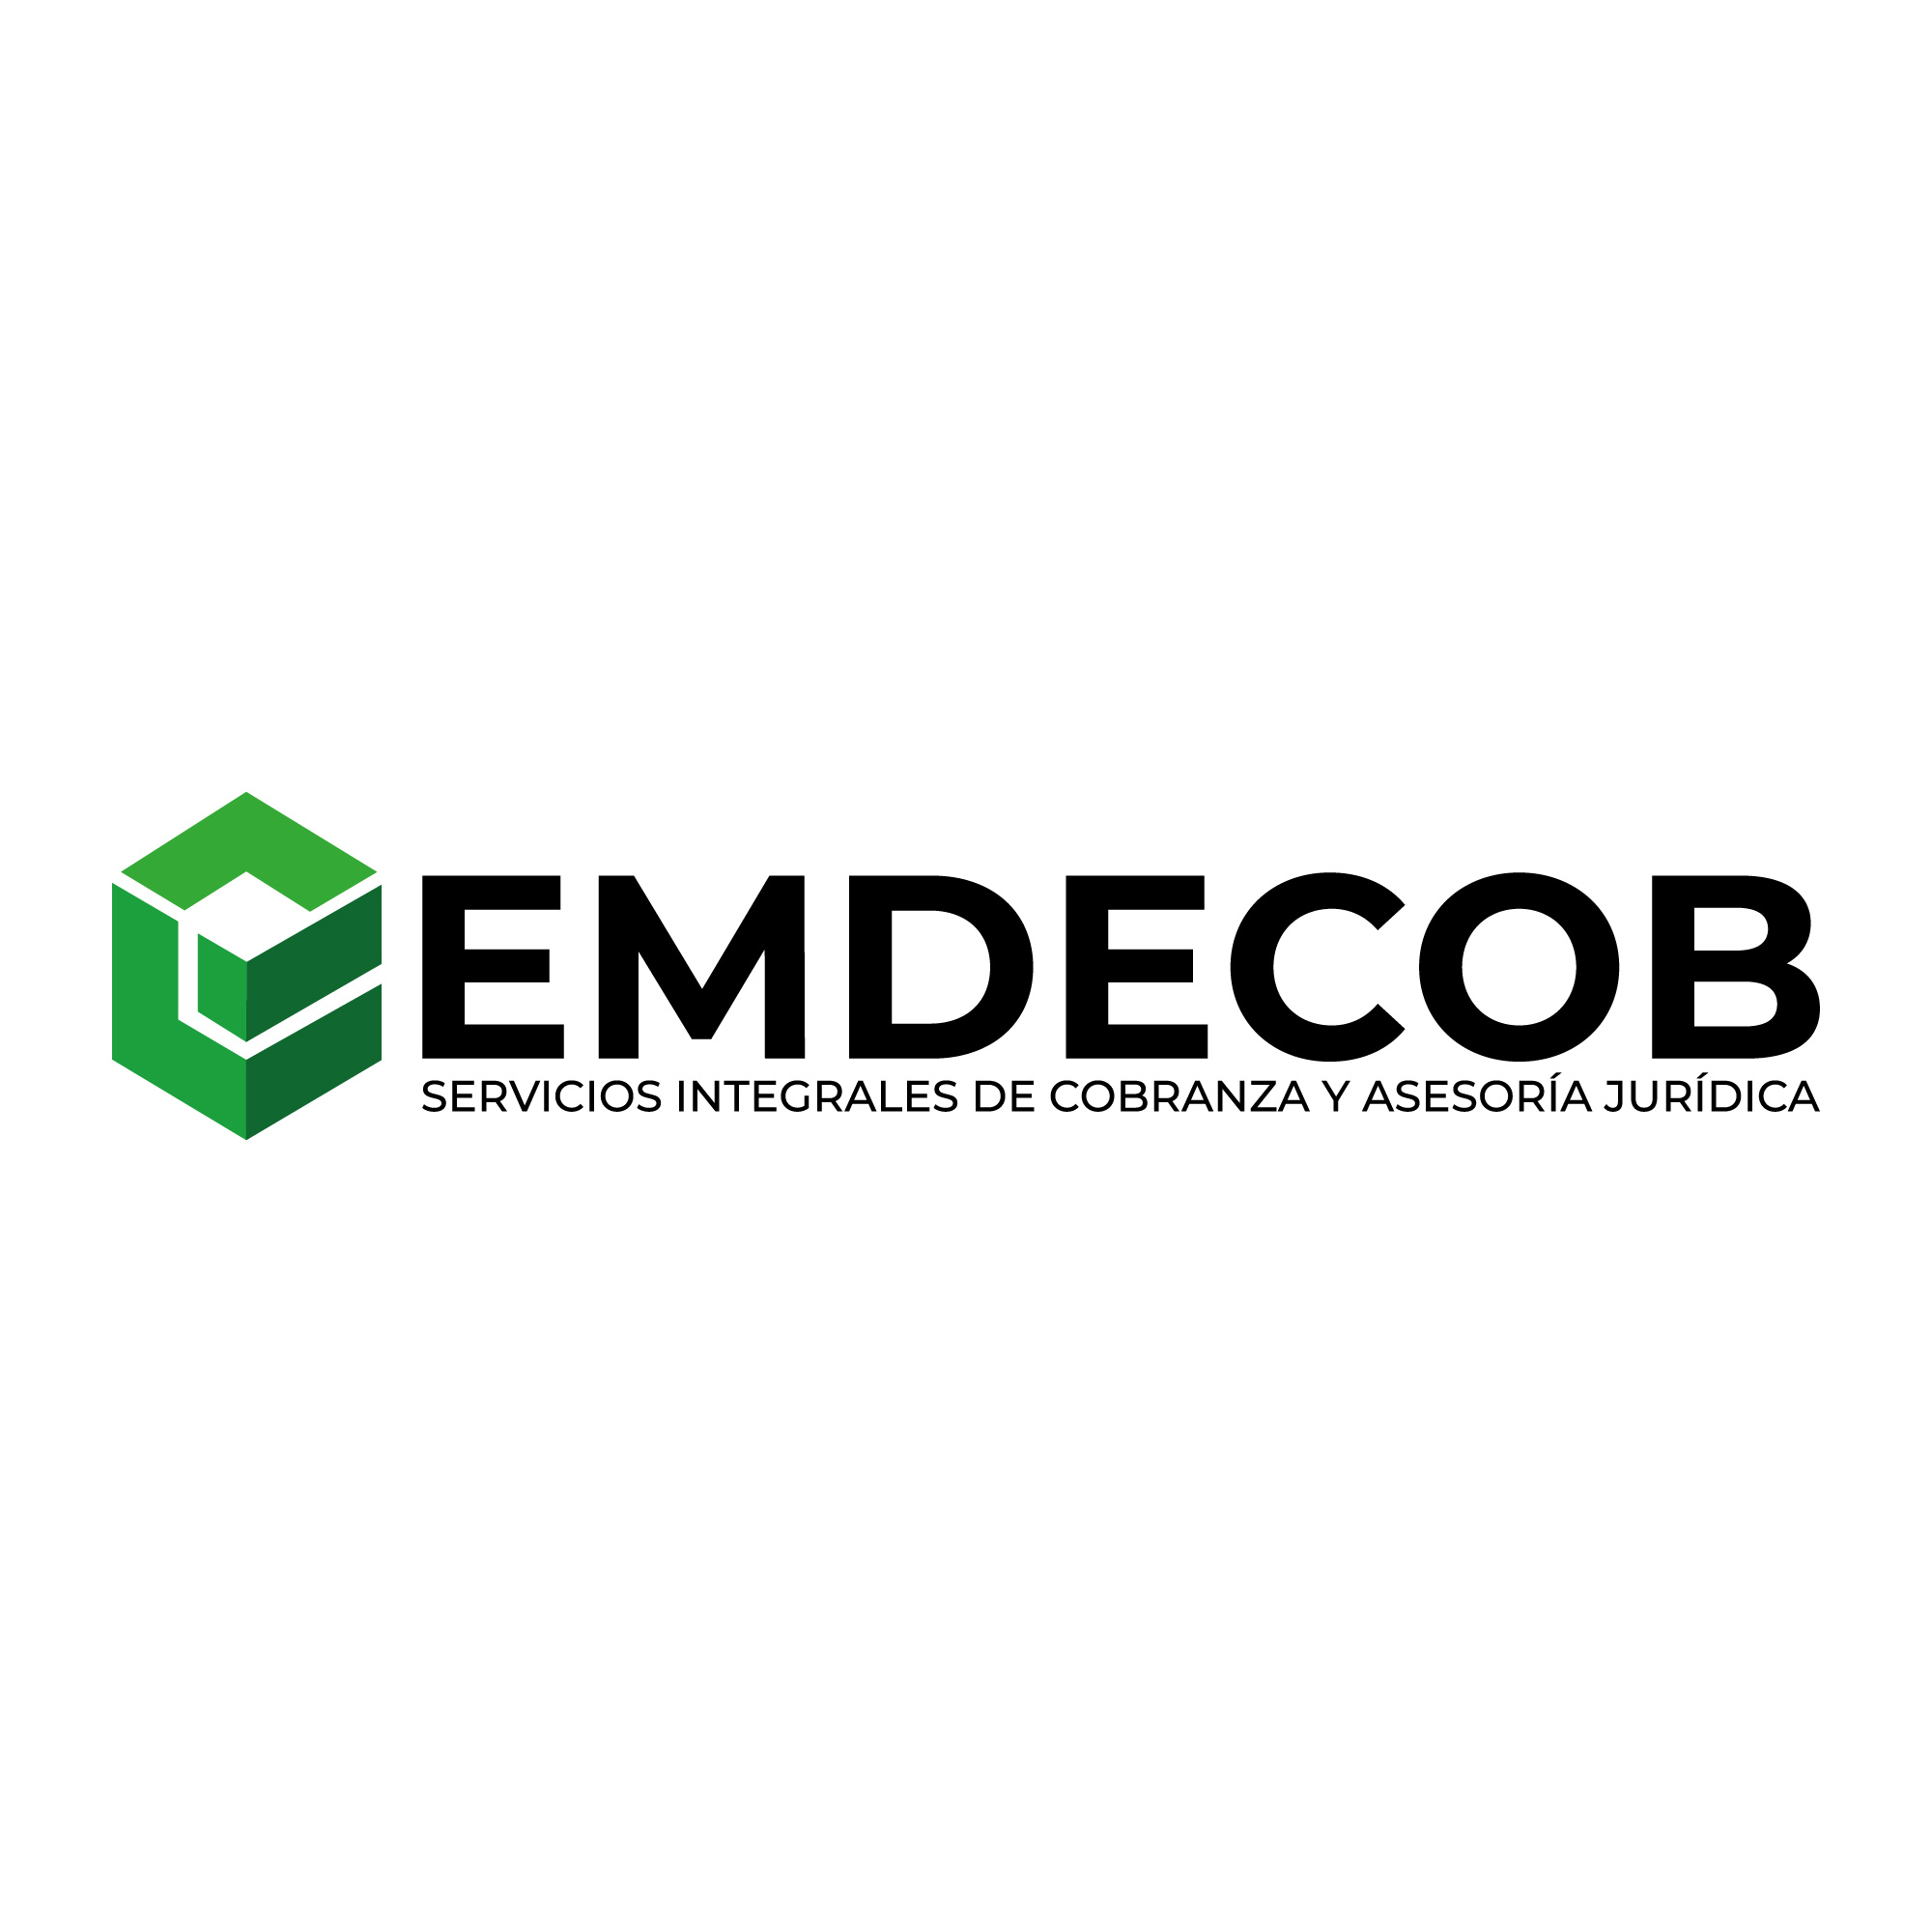 Emdecob